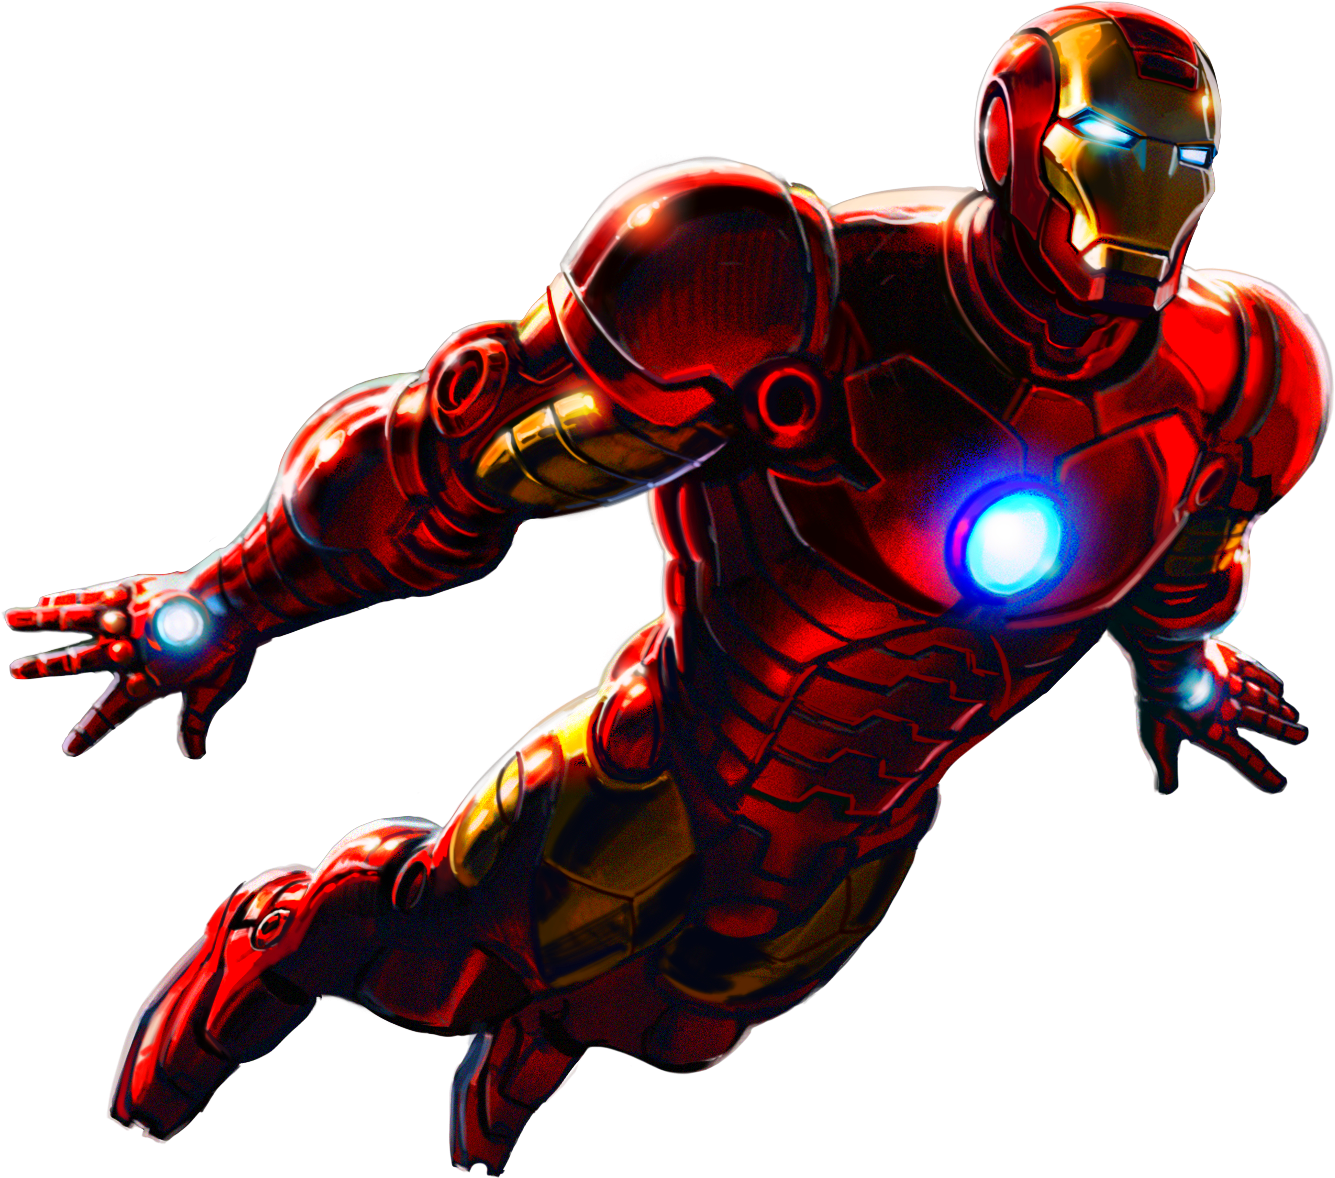 Marvel Avengers Iron Man (1344x1182)